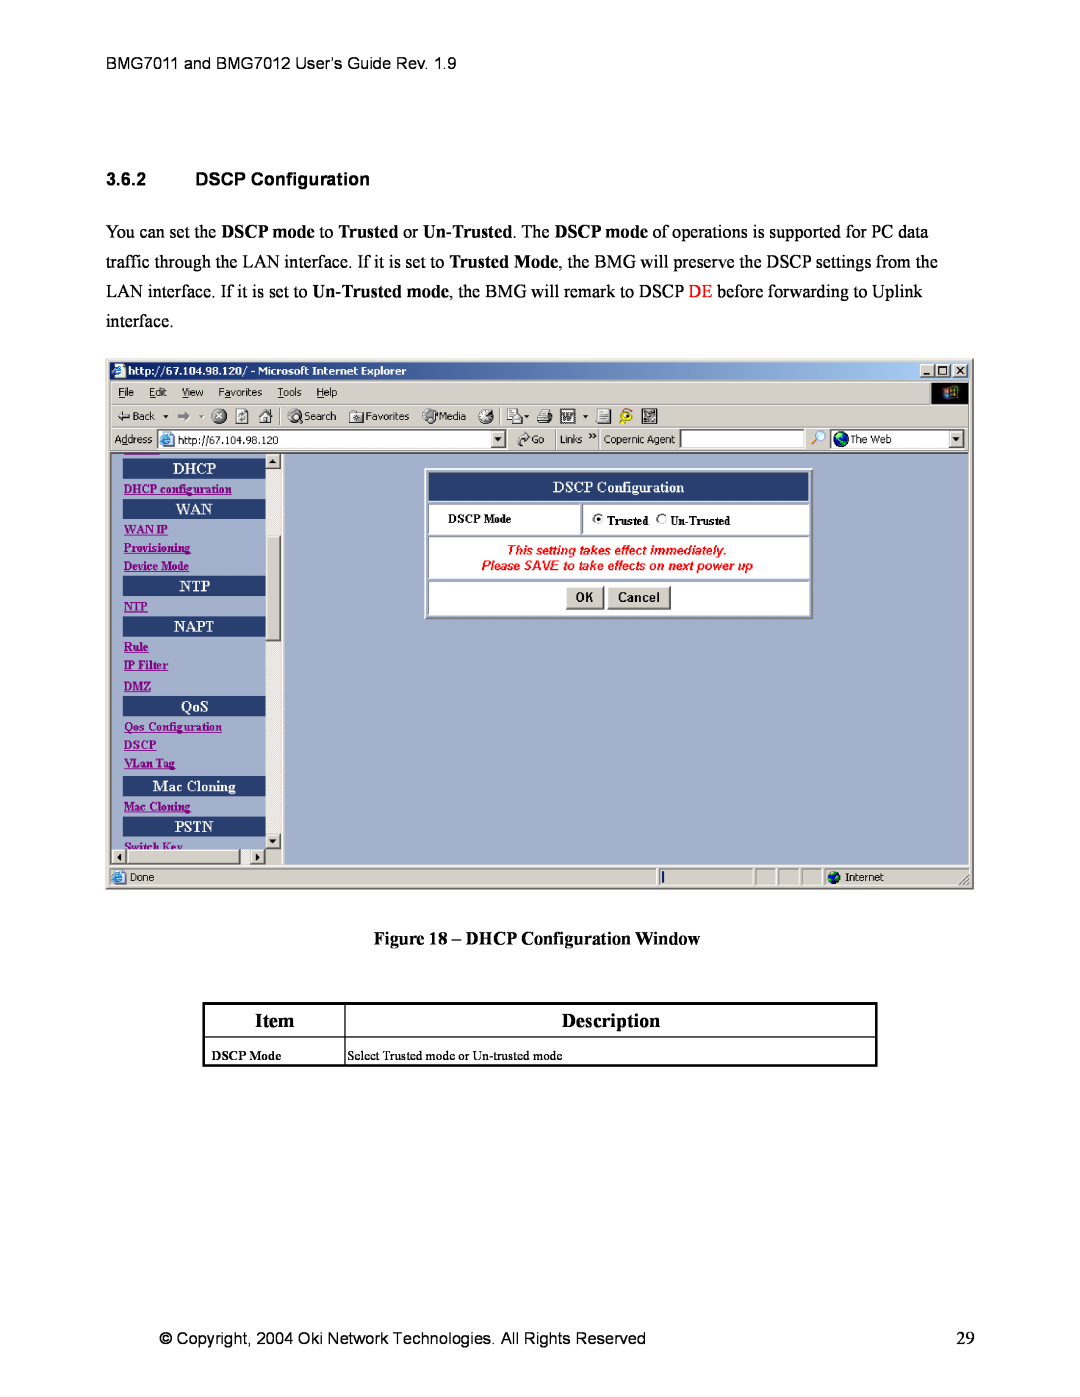 Oki BMG7011, BMG7012 manual 3.6.2DSCP Configuration, DHCP Configuration Window, Description 